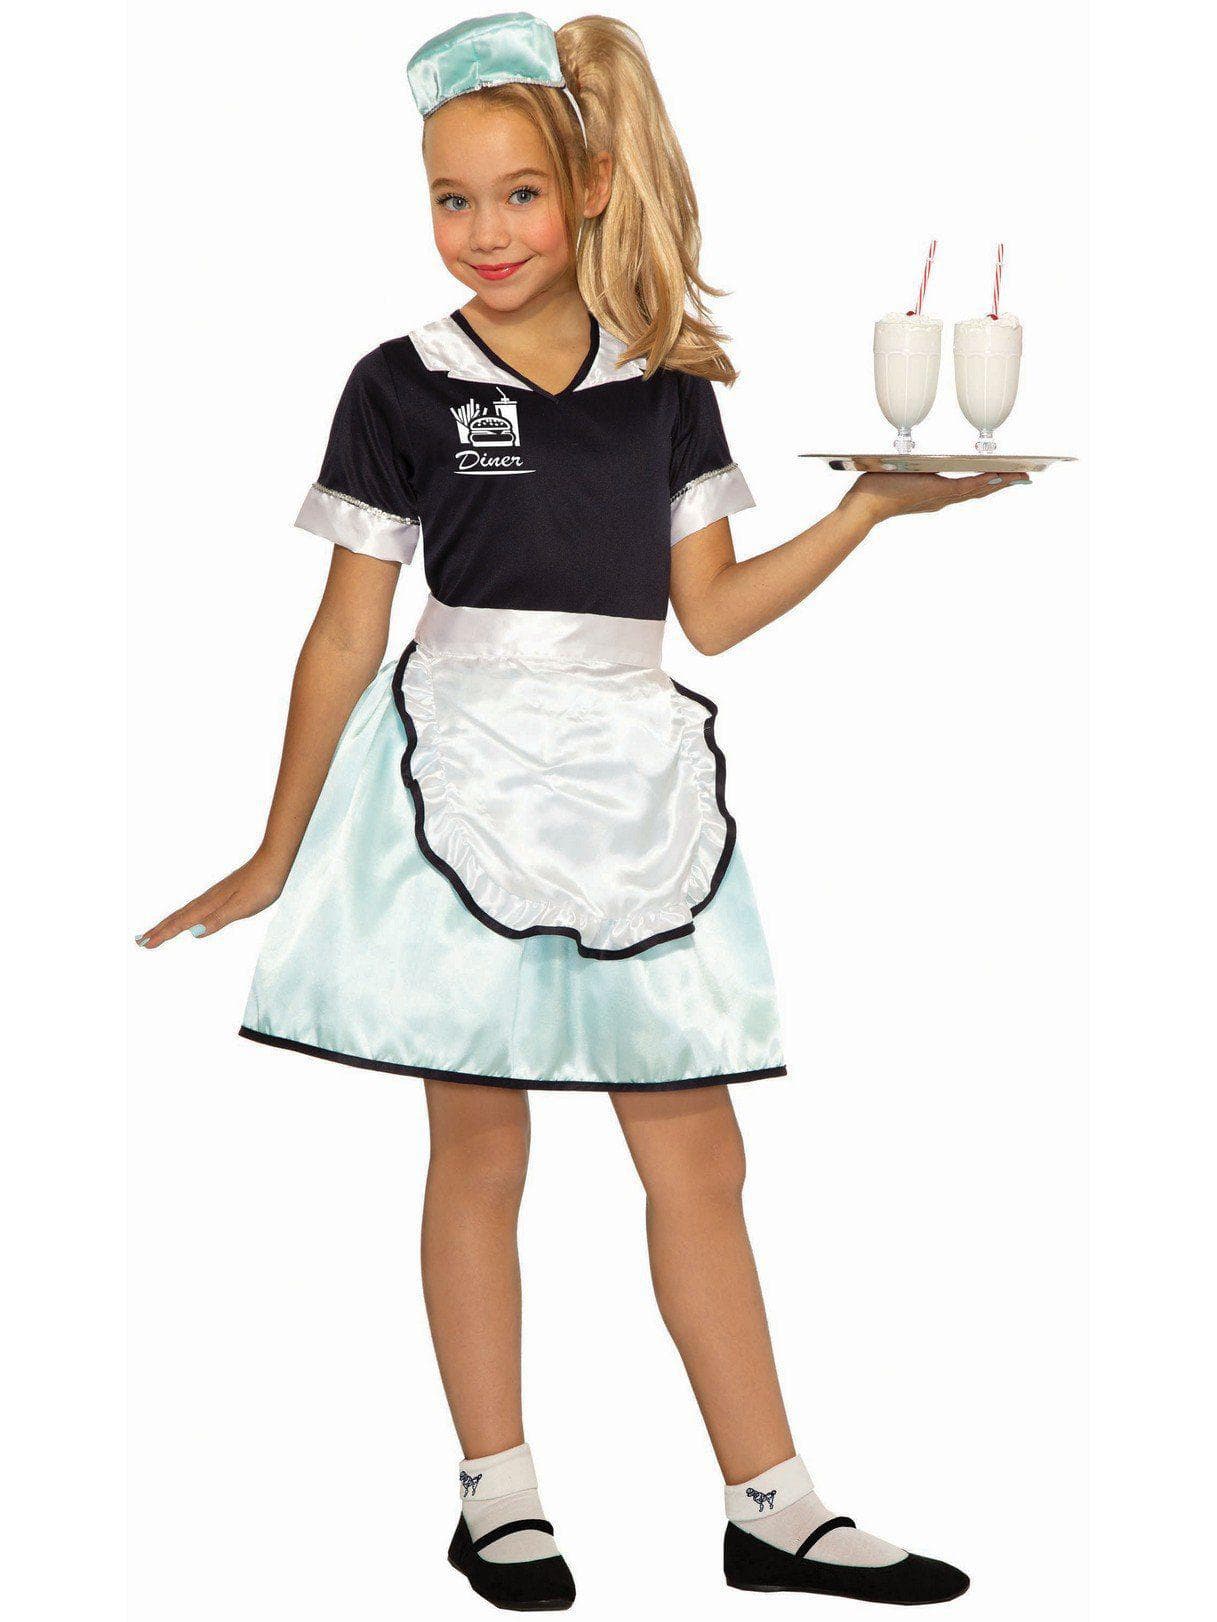 Kid's 50's Diner Waitress Costume - costumes.com